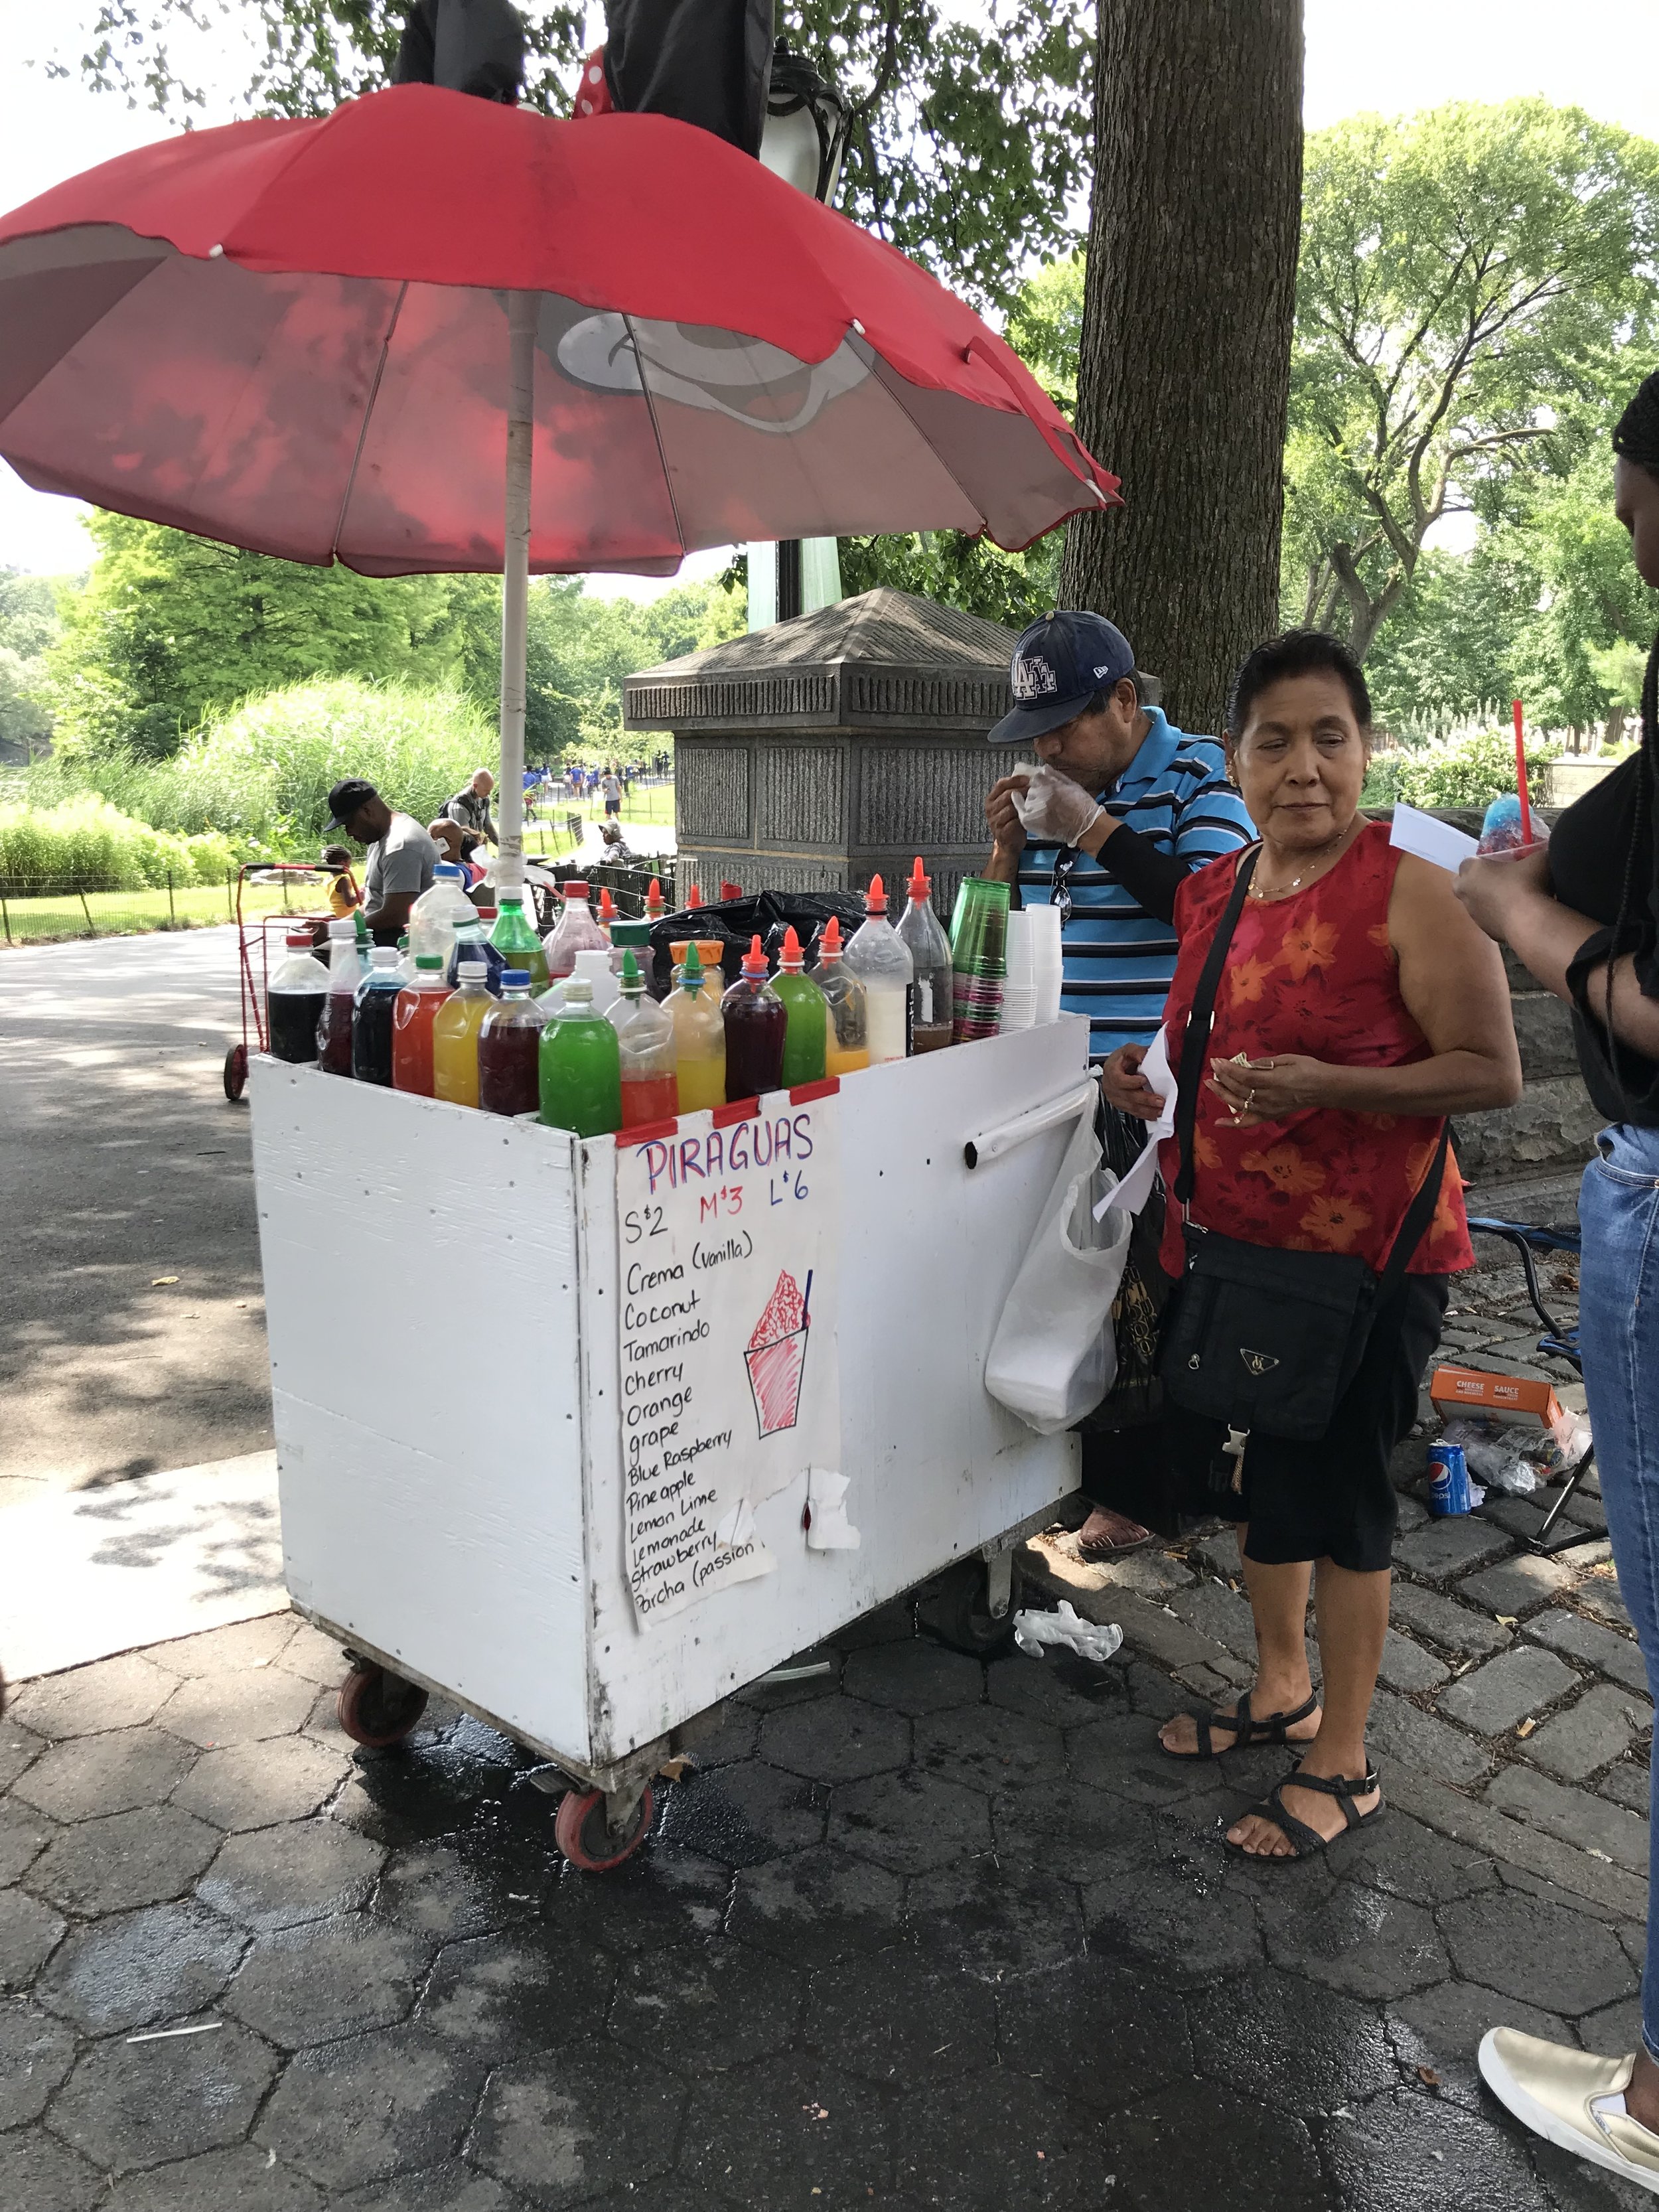 Piraguas Cart in Central Park